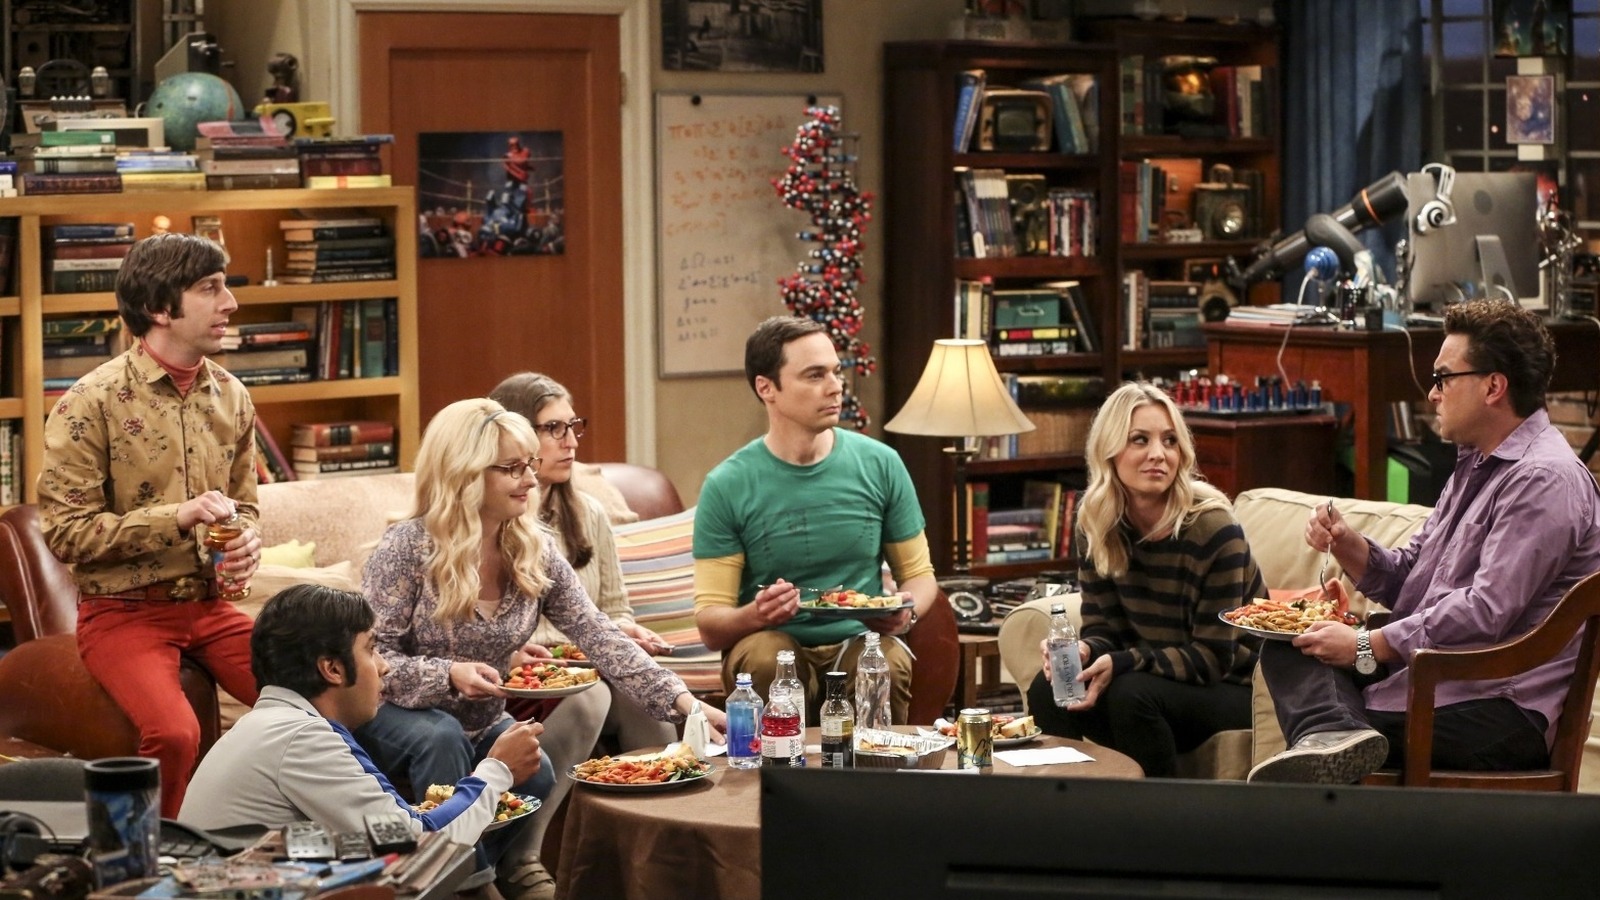 Where Is The Big Bang Theory Set?